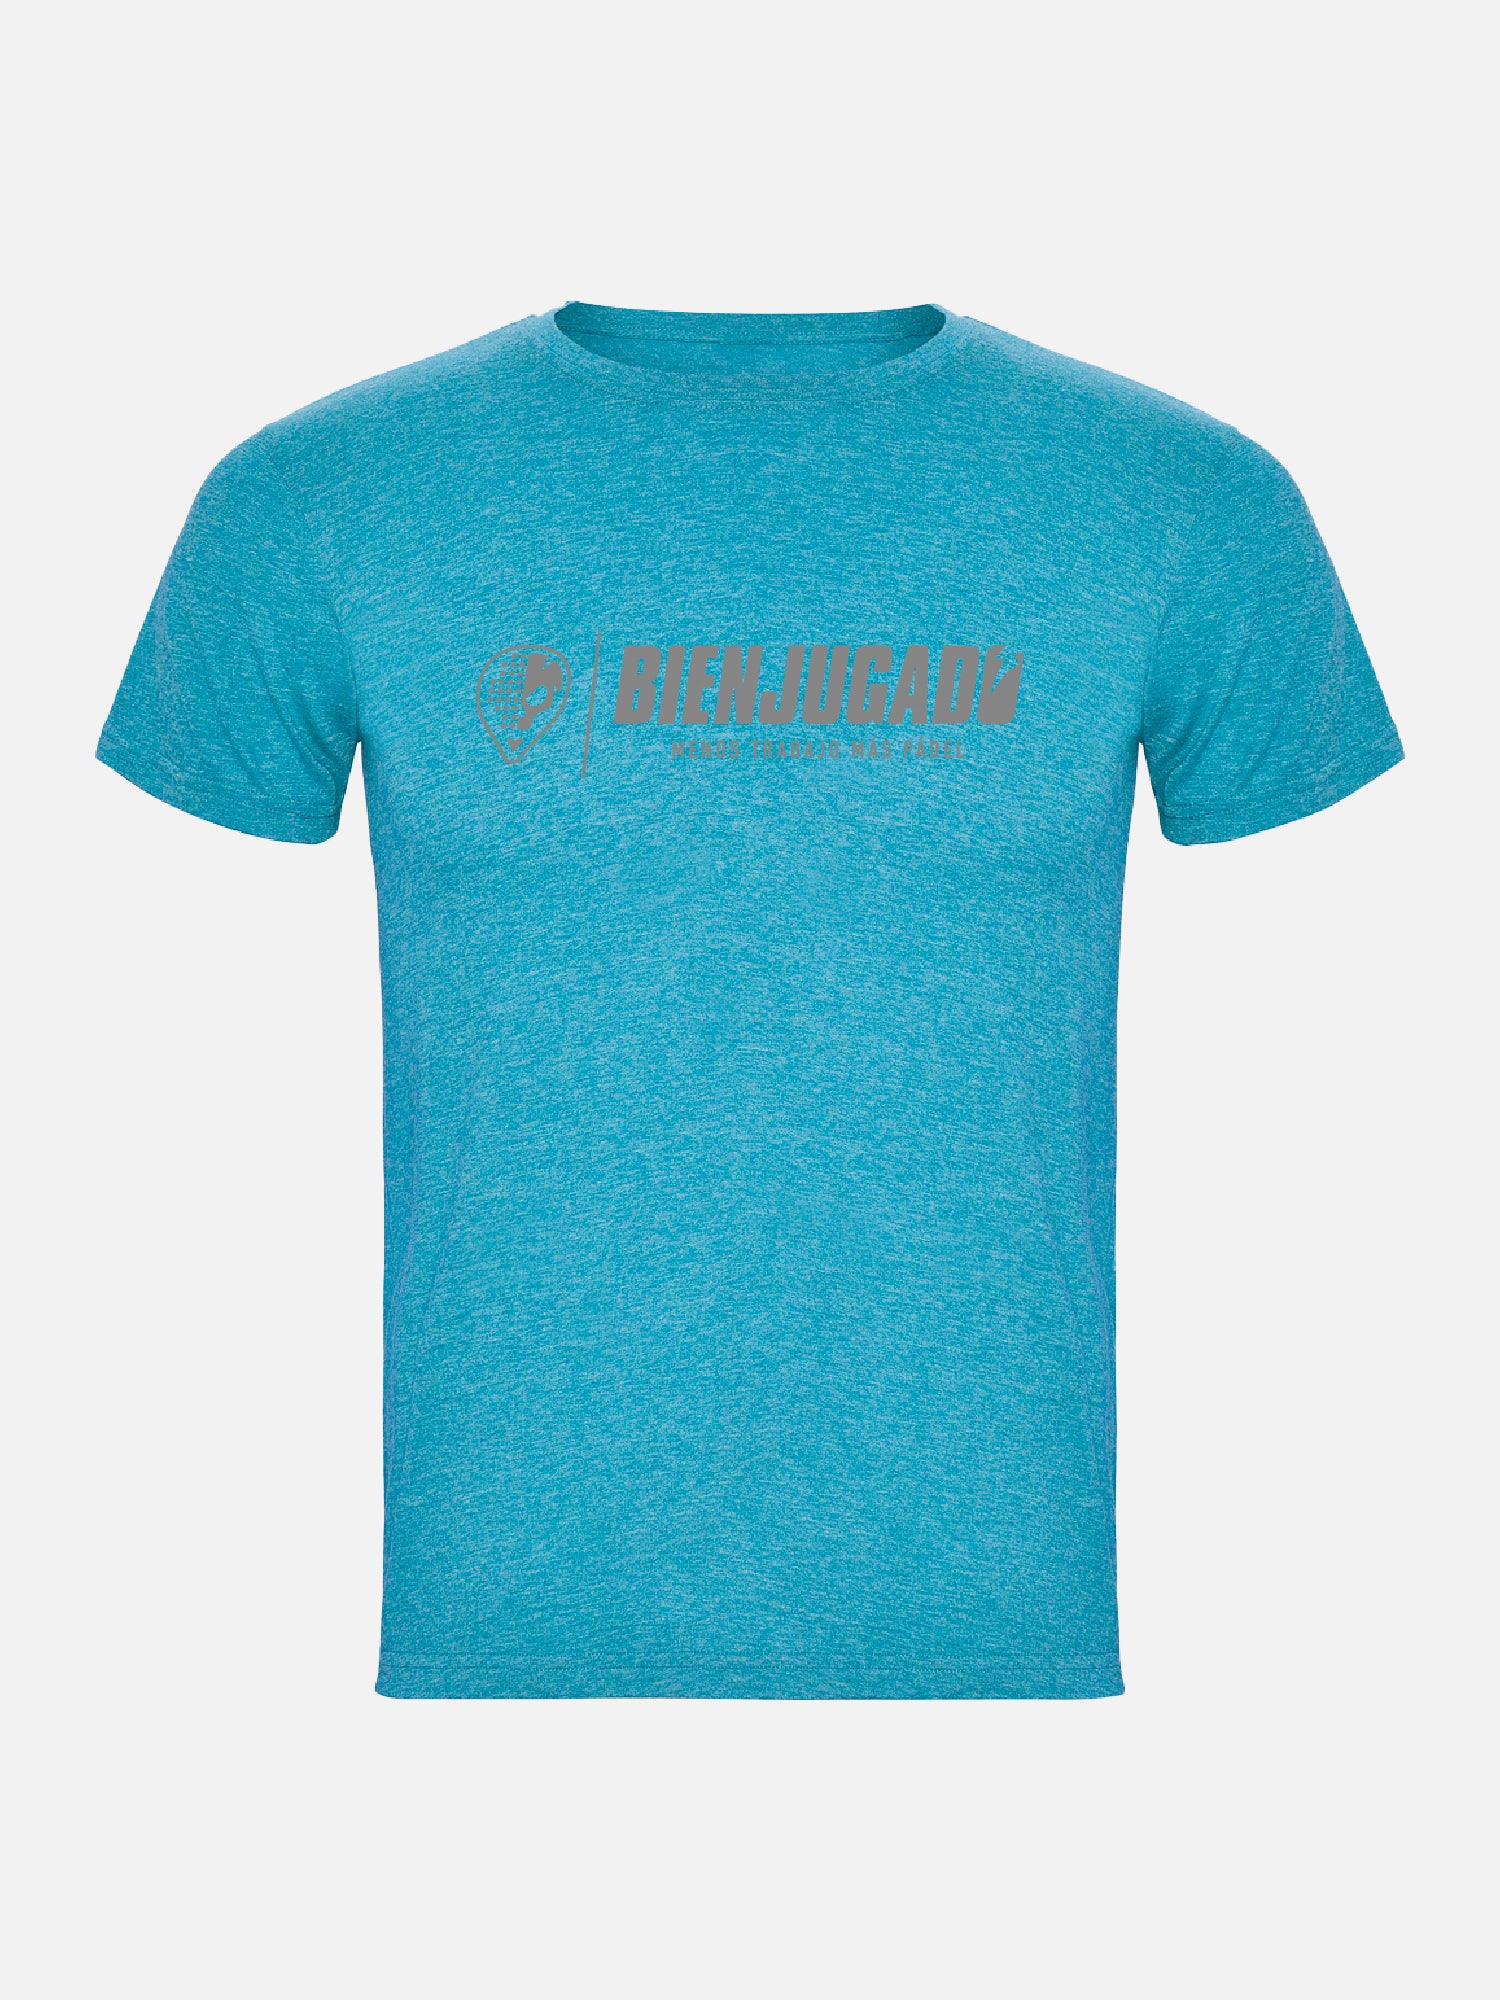 Juan T-Shirt - Turquoise